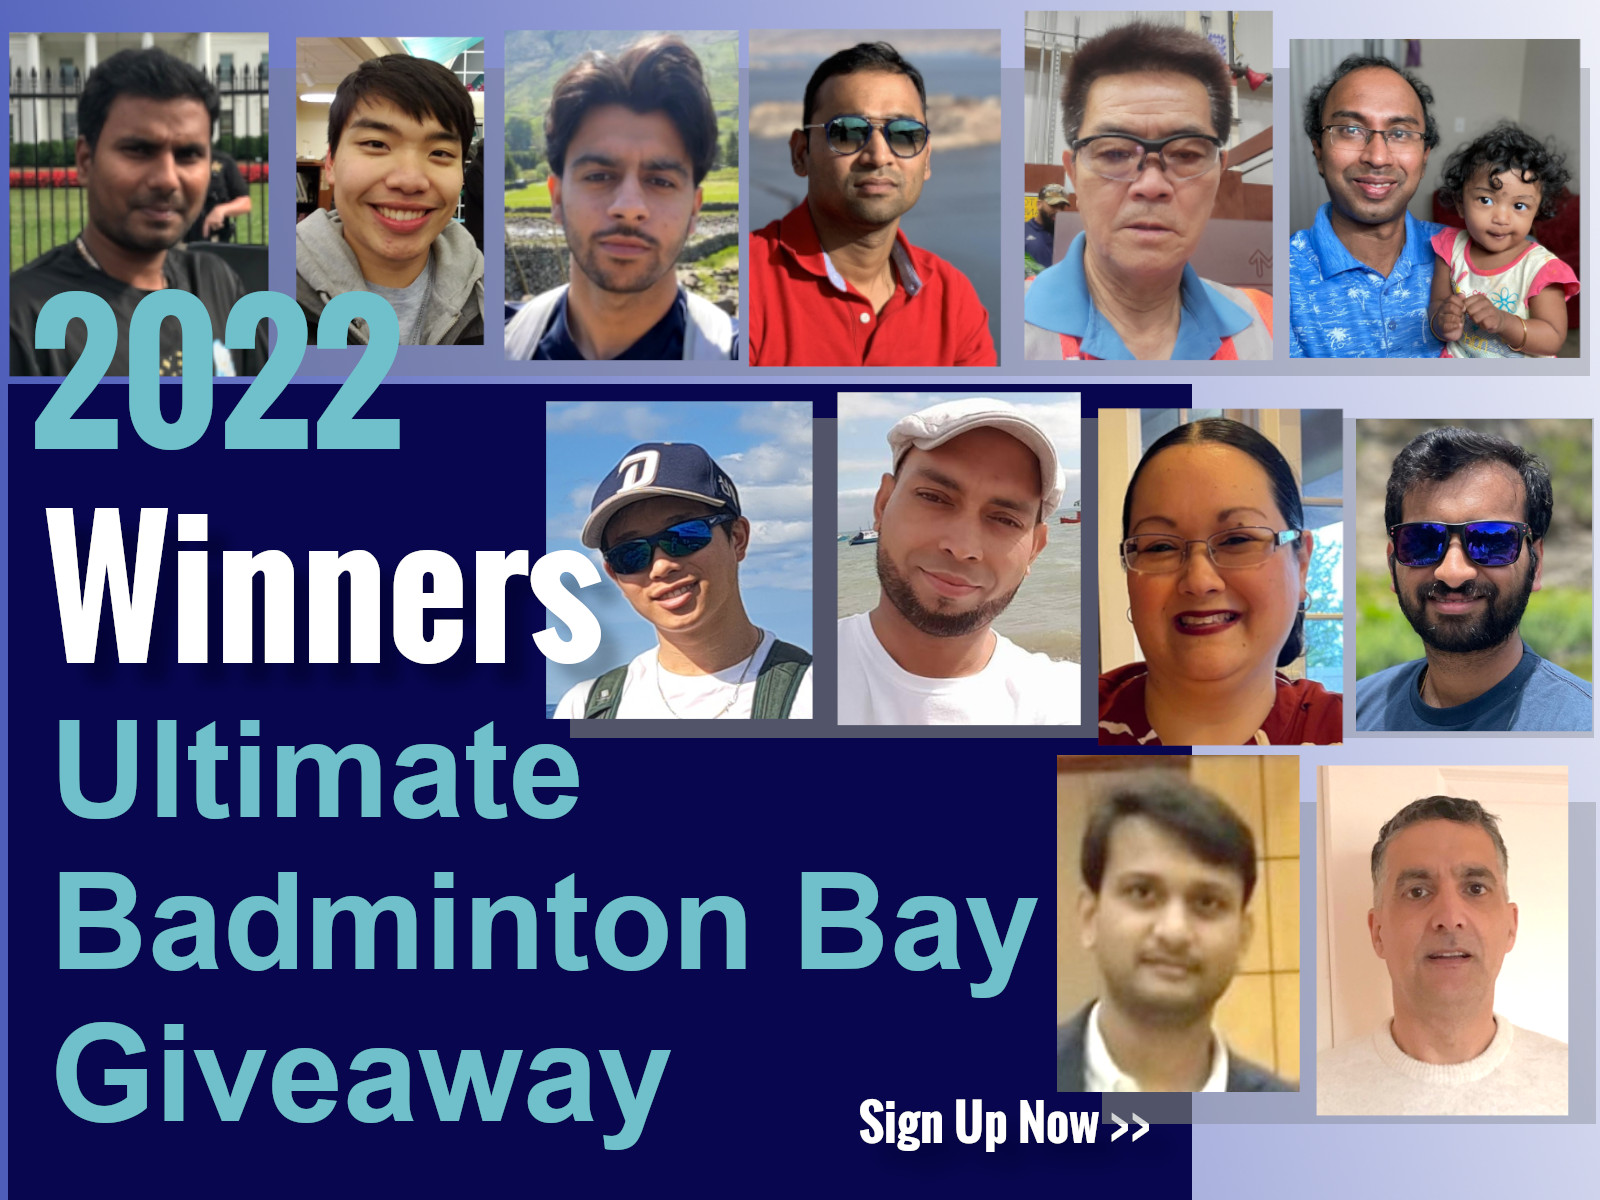 2022 Winners Ultimate Badminton Bay Giveaway